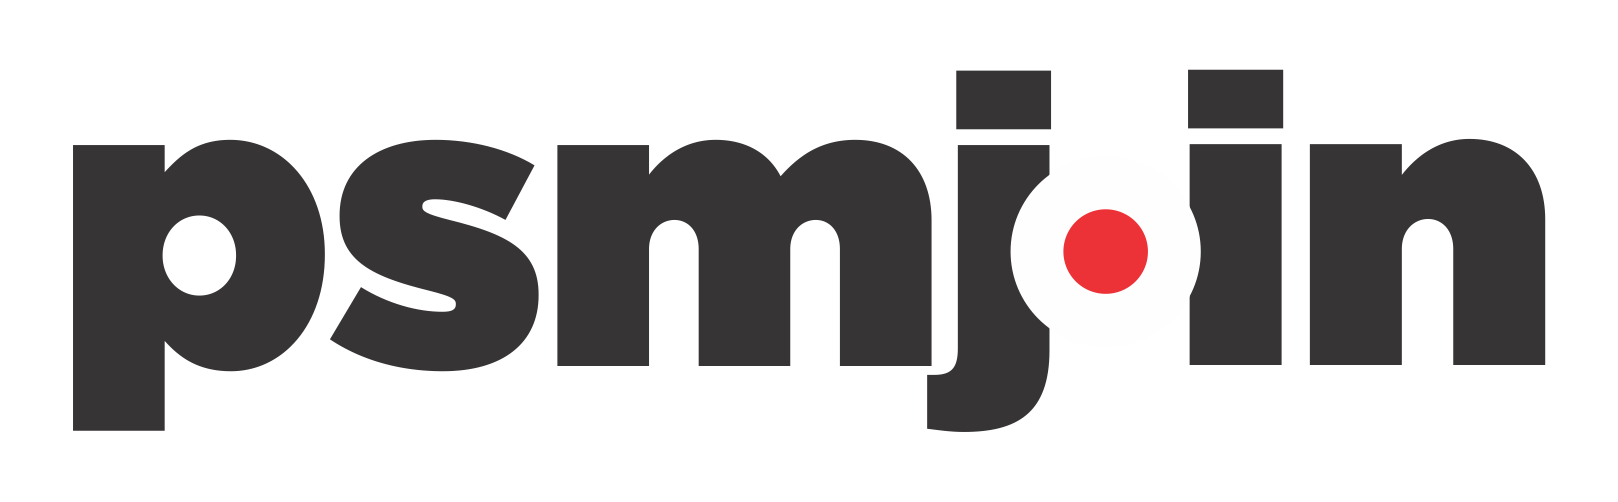 PSMJ Logo